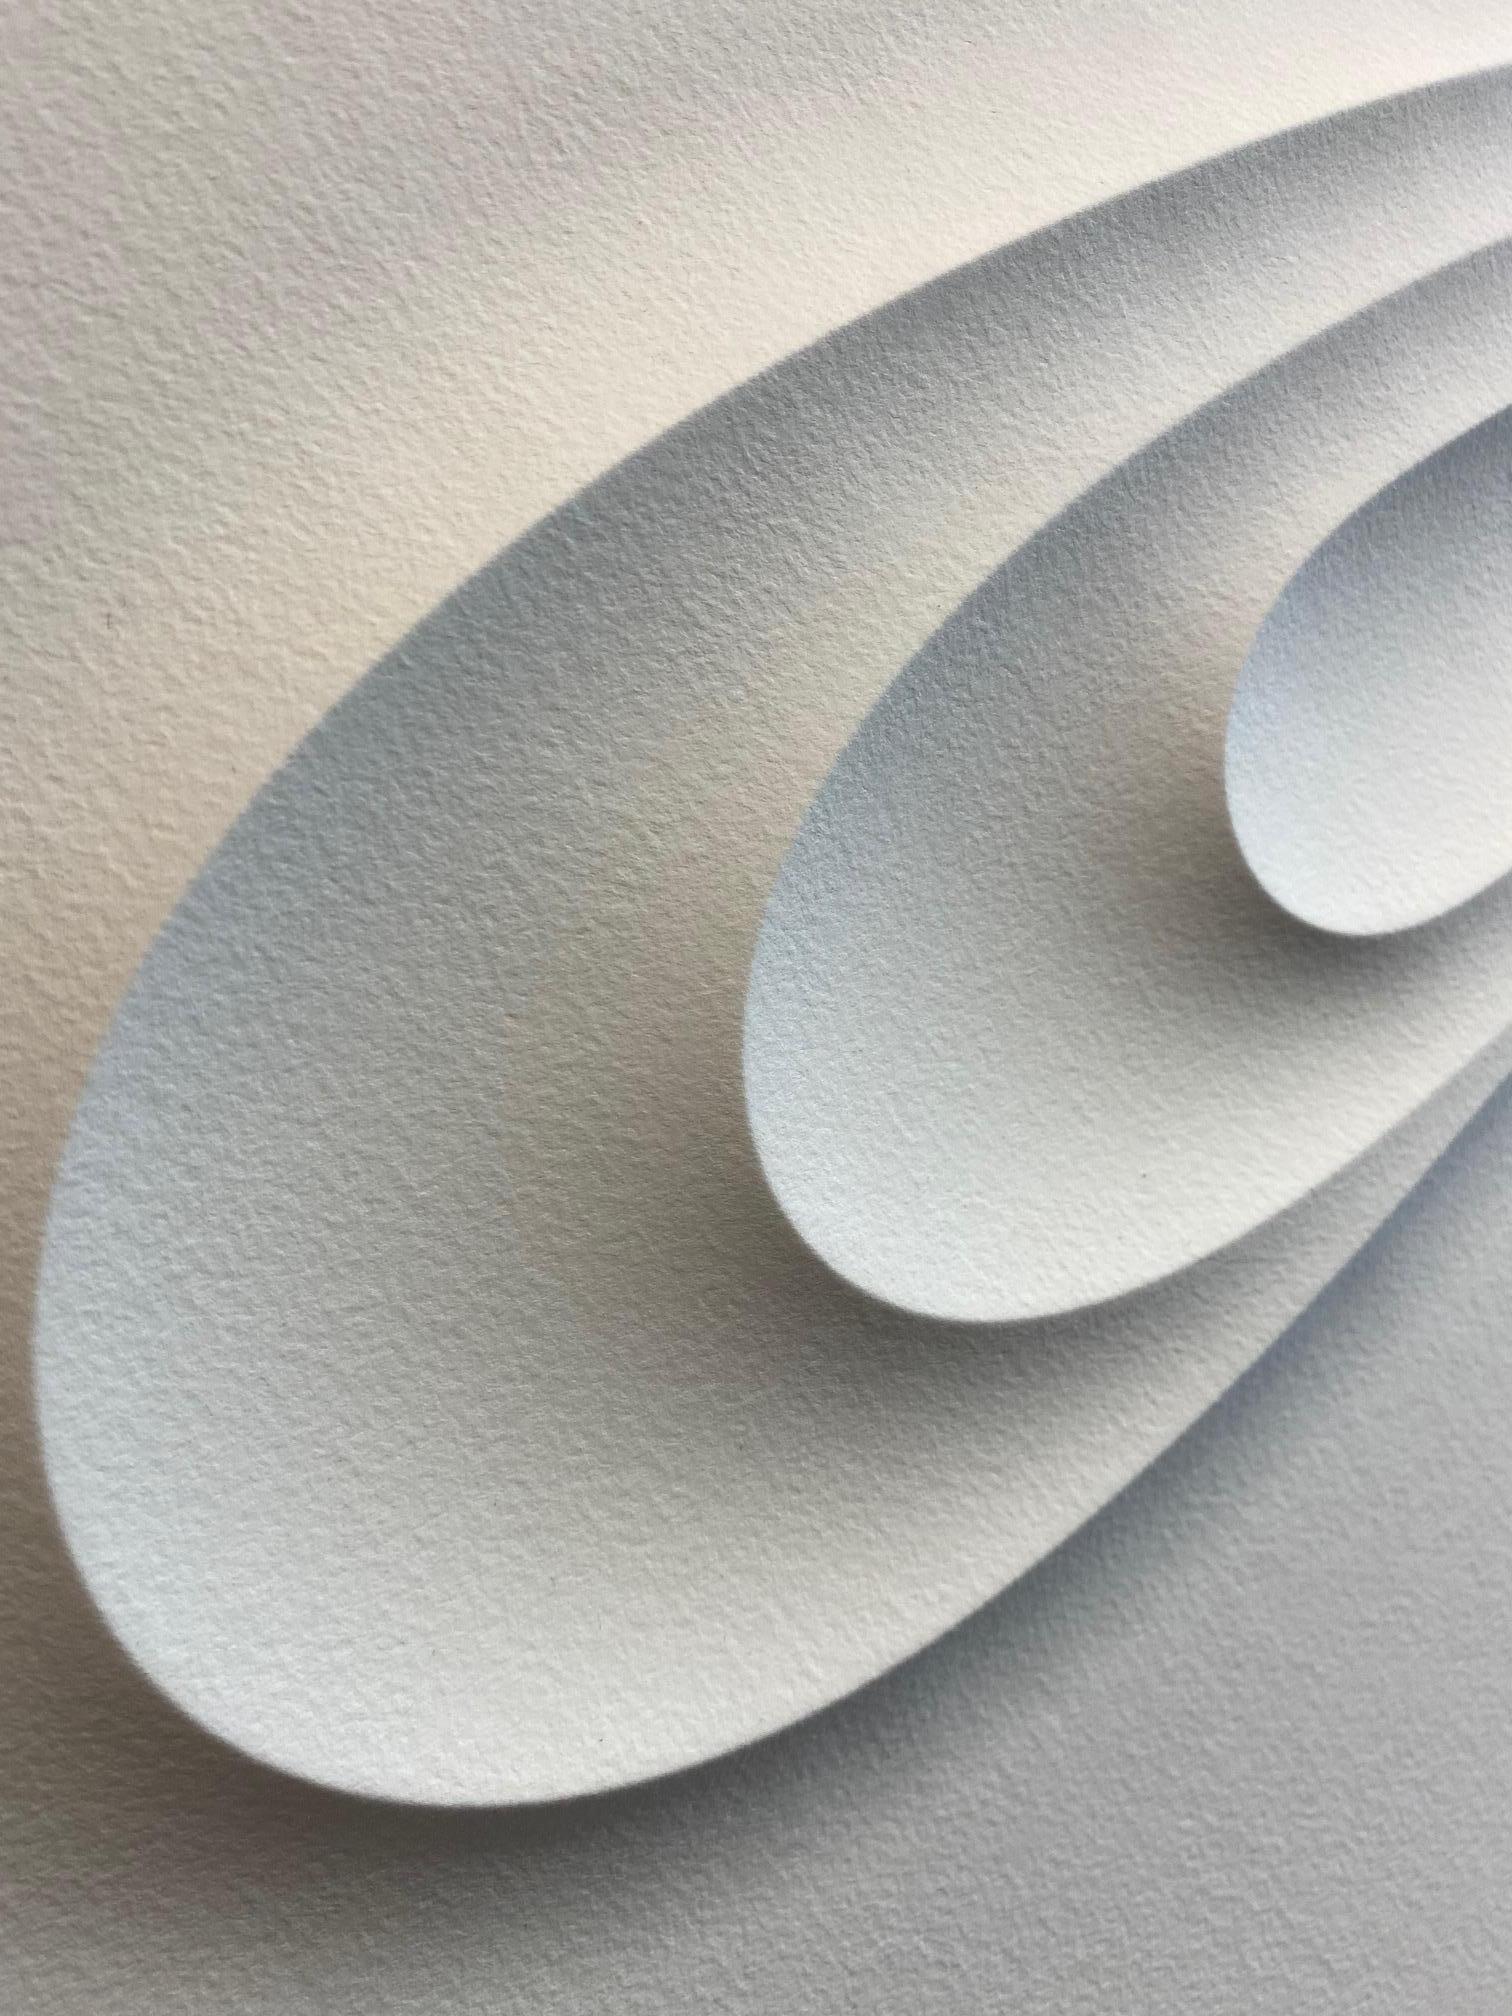 Tango - embossed paper work, minimalist curvilinear white artwork Jacinto Moros 3